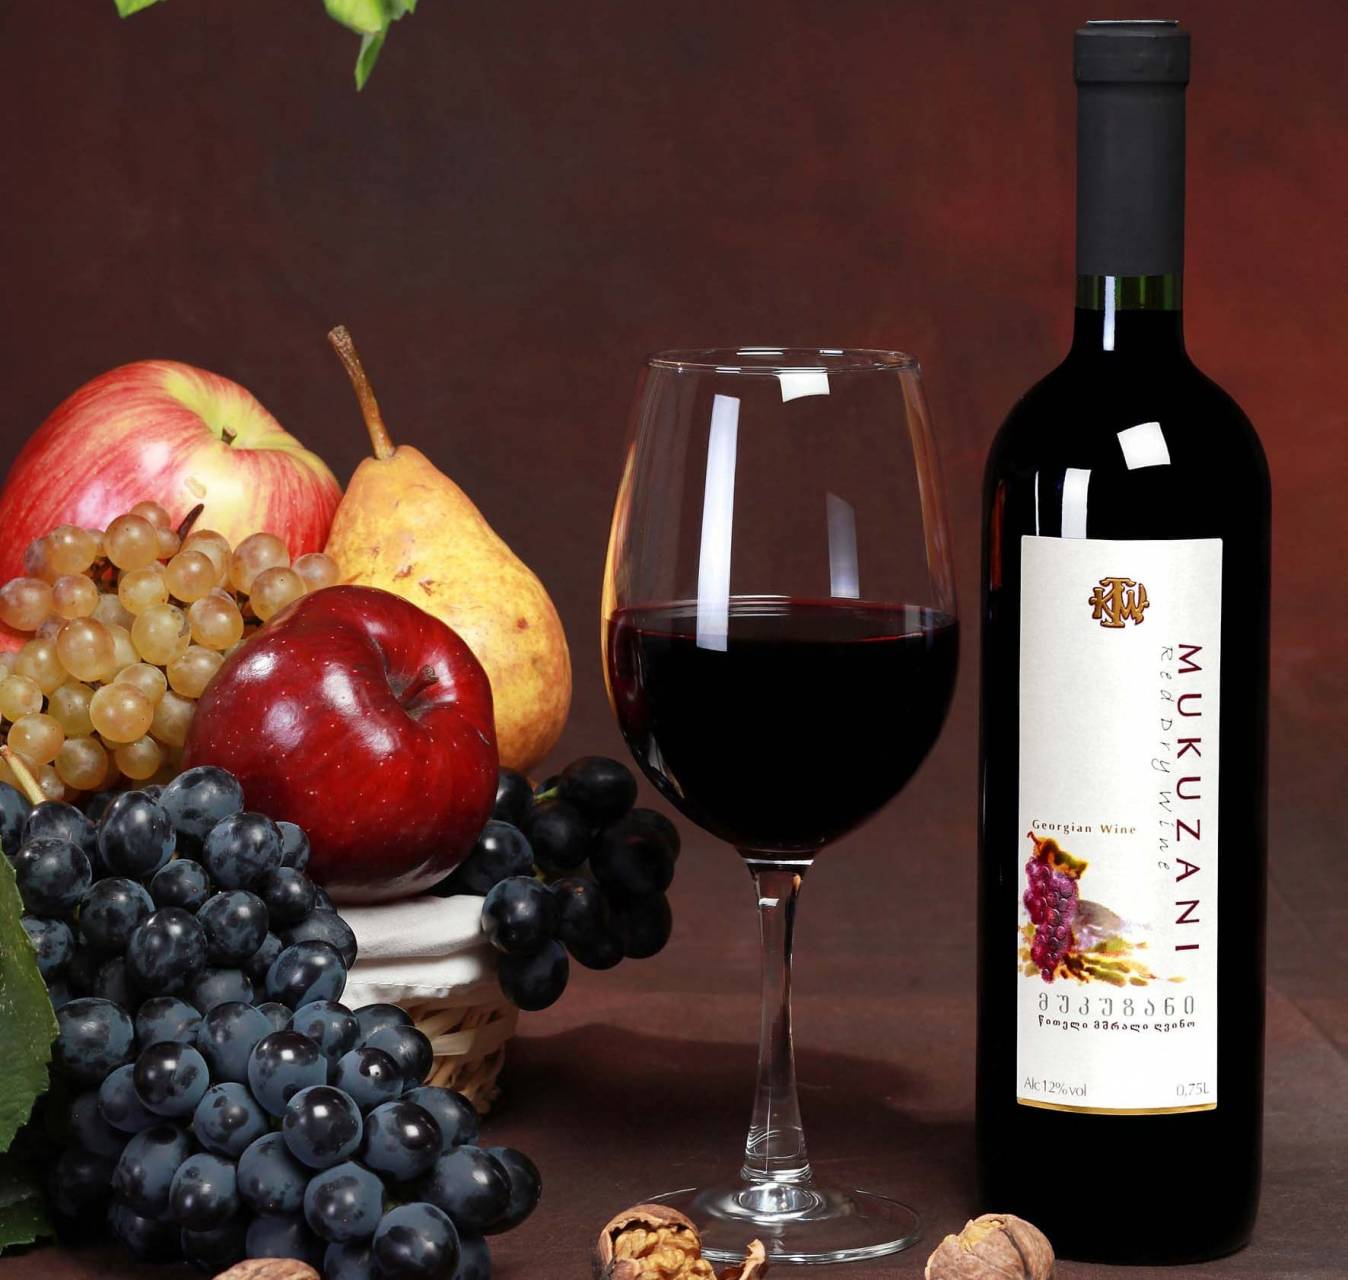 Картинку вине. Мукузани виноград. Грузинское вино красное. Винный сорт Мукузани. Вино виноград Грузия.